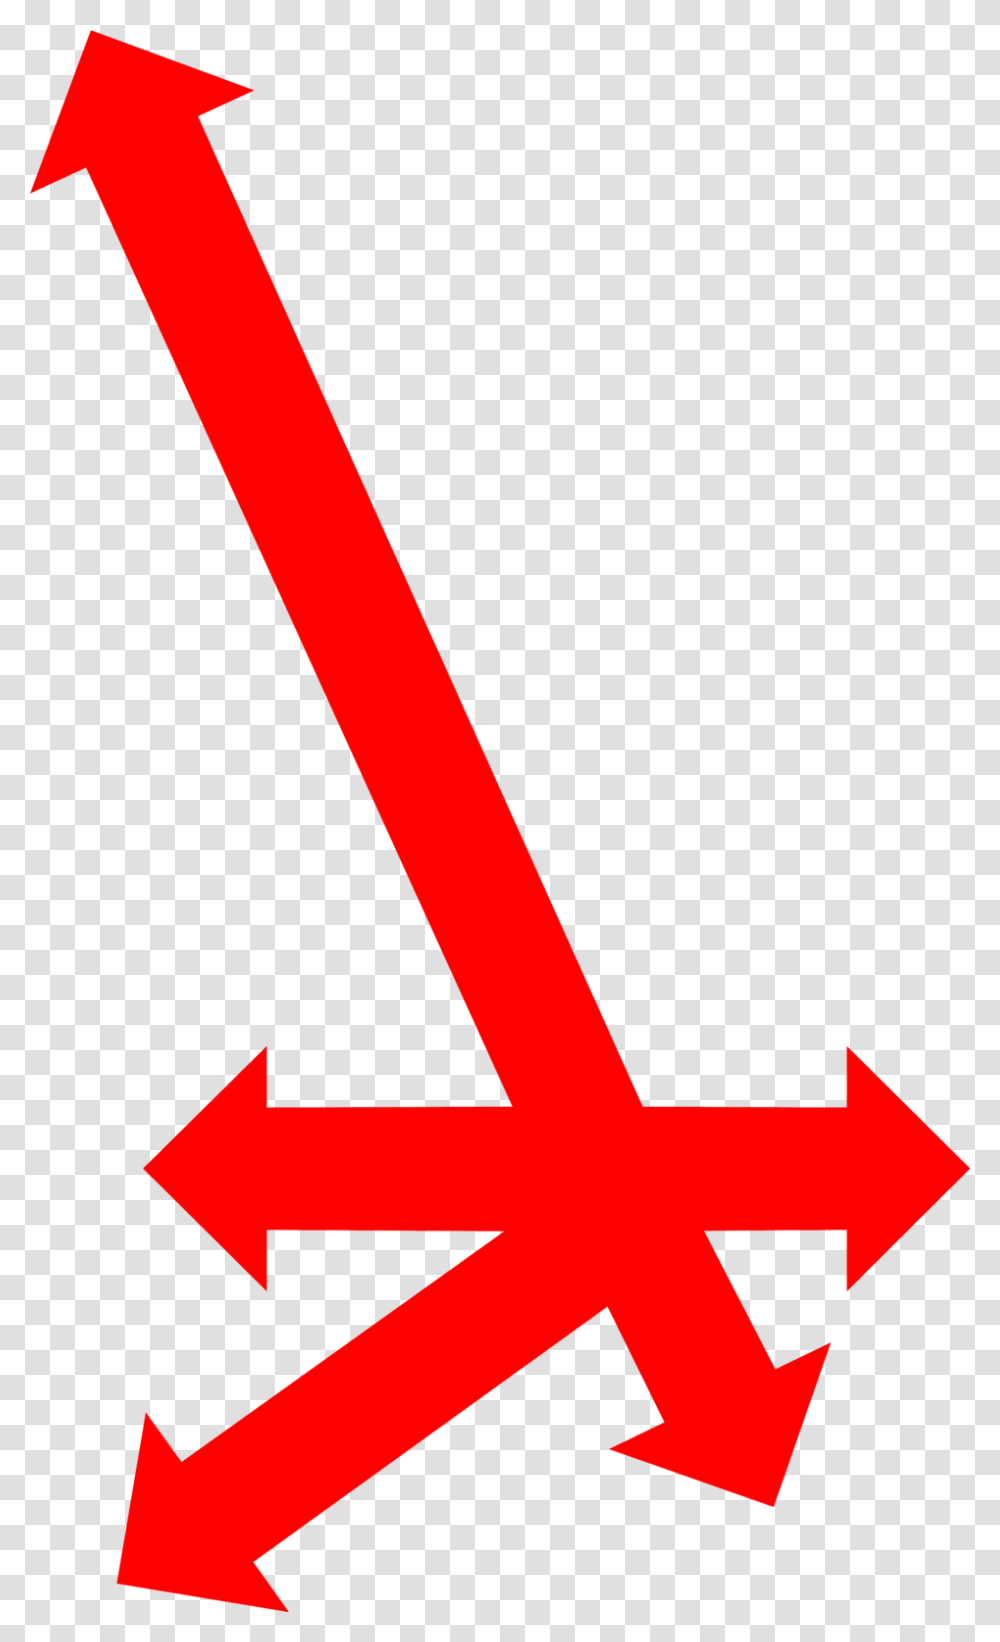 Arrows Red Free Stock Photo Illustration Of A Multi, Emblem, Hook, Logo Transparent Png